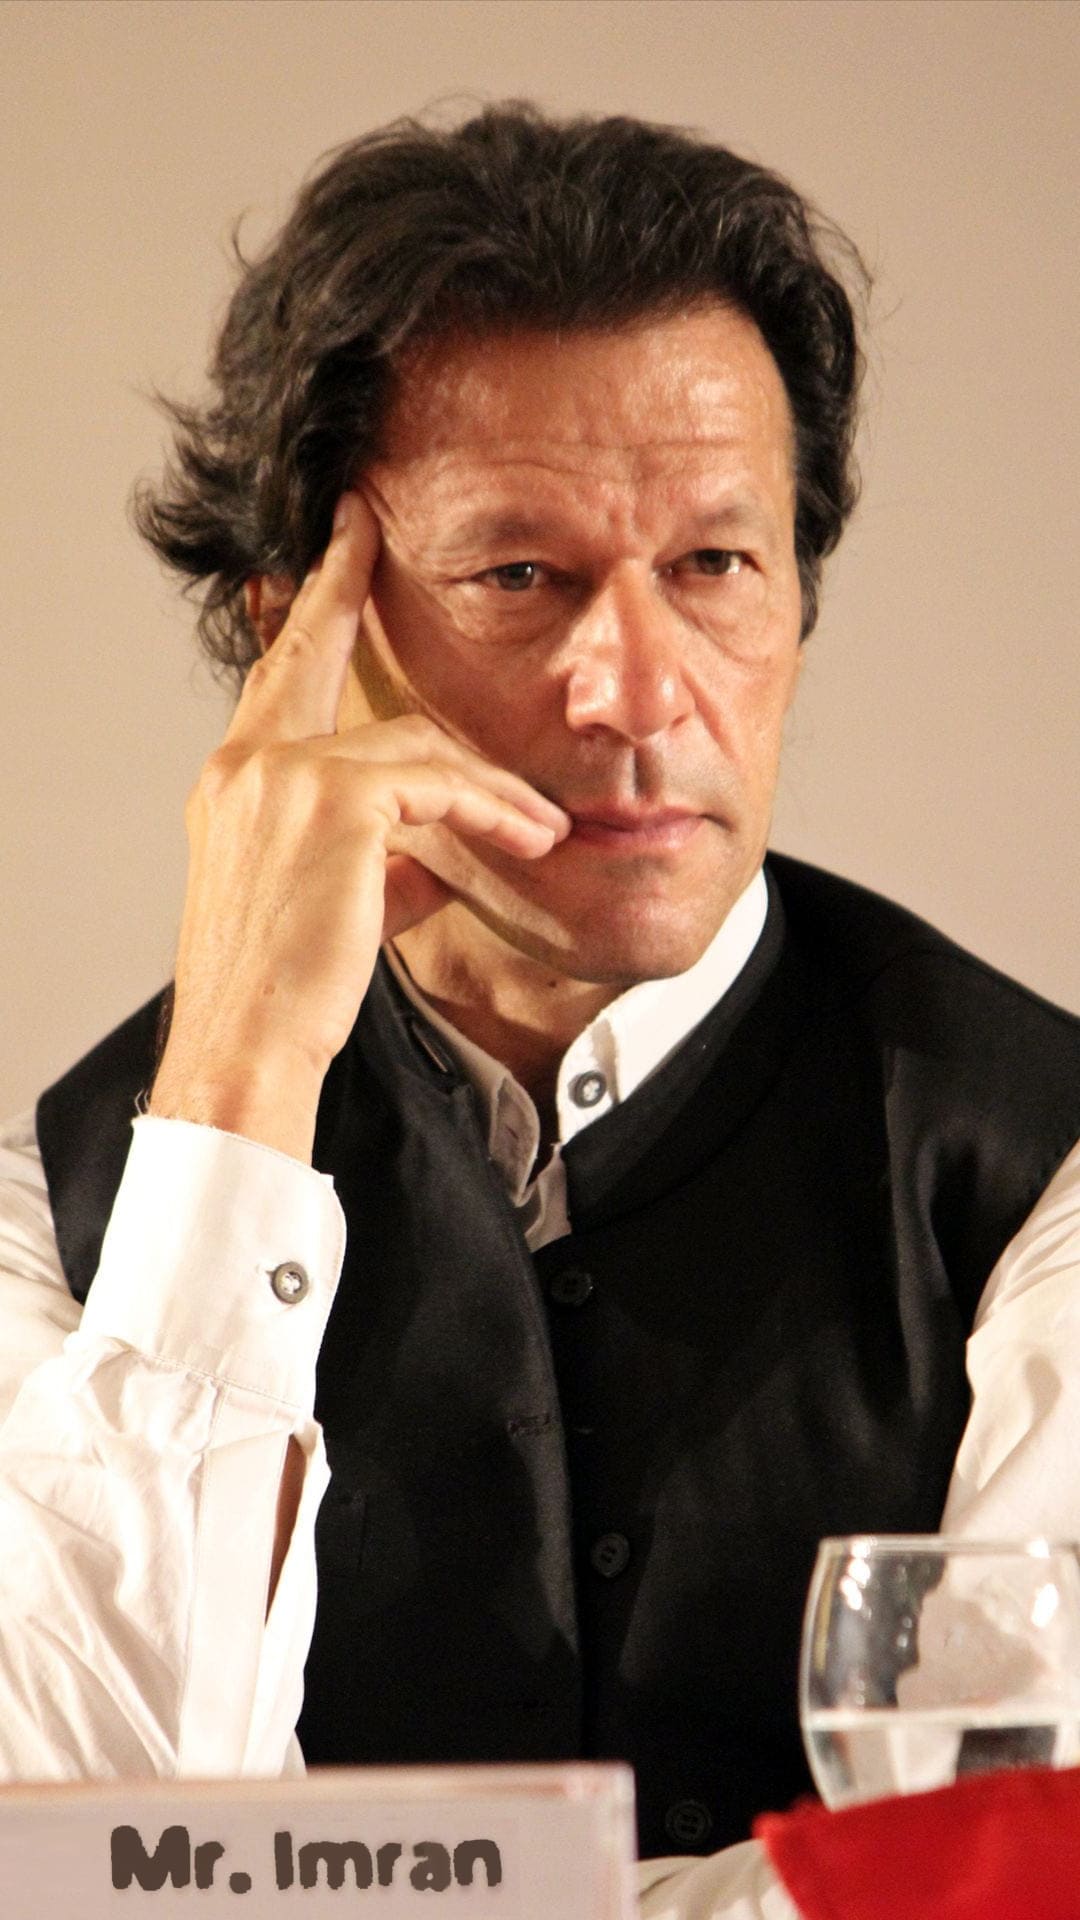 PM Imran Khan Wallpapers